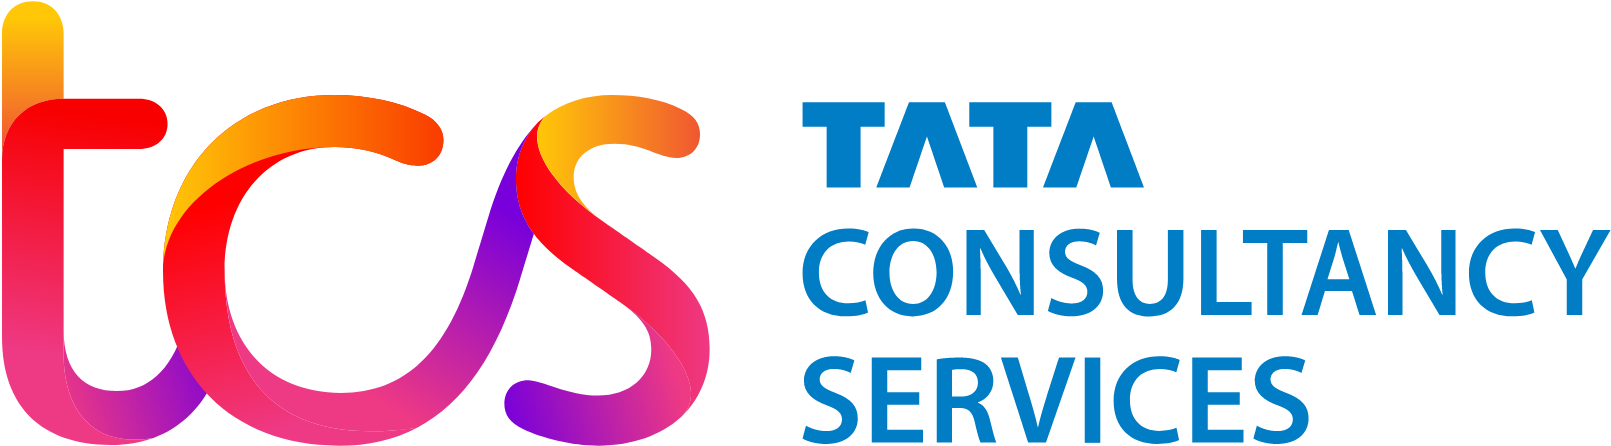 TCS - Tata Consultancy Services Logo